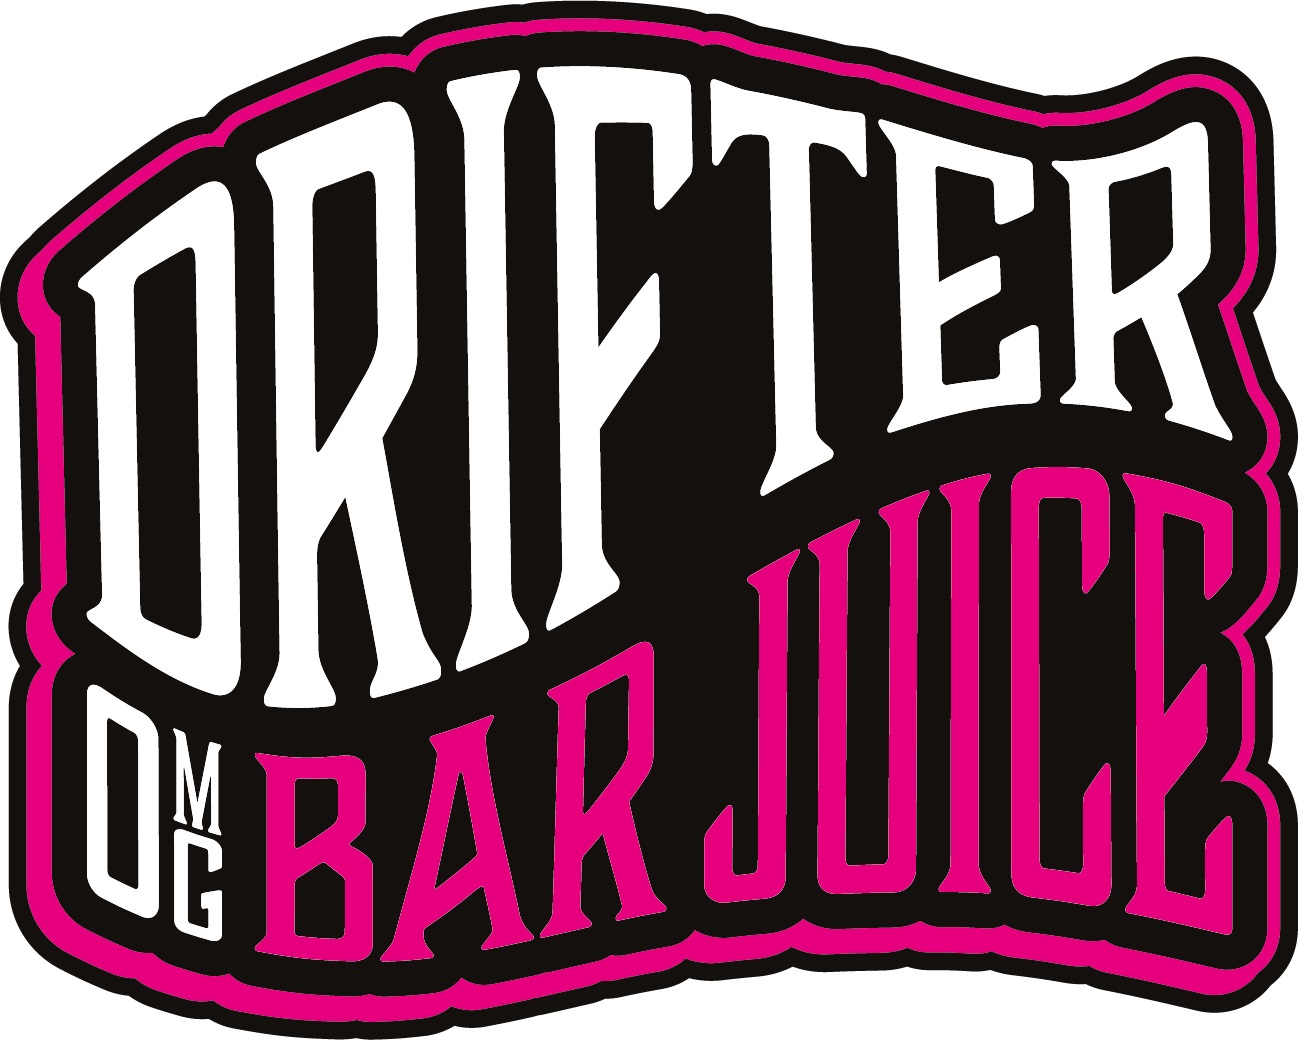 Drifter 0mg bar juice logo uk